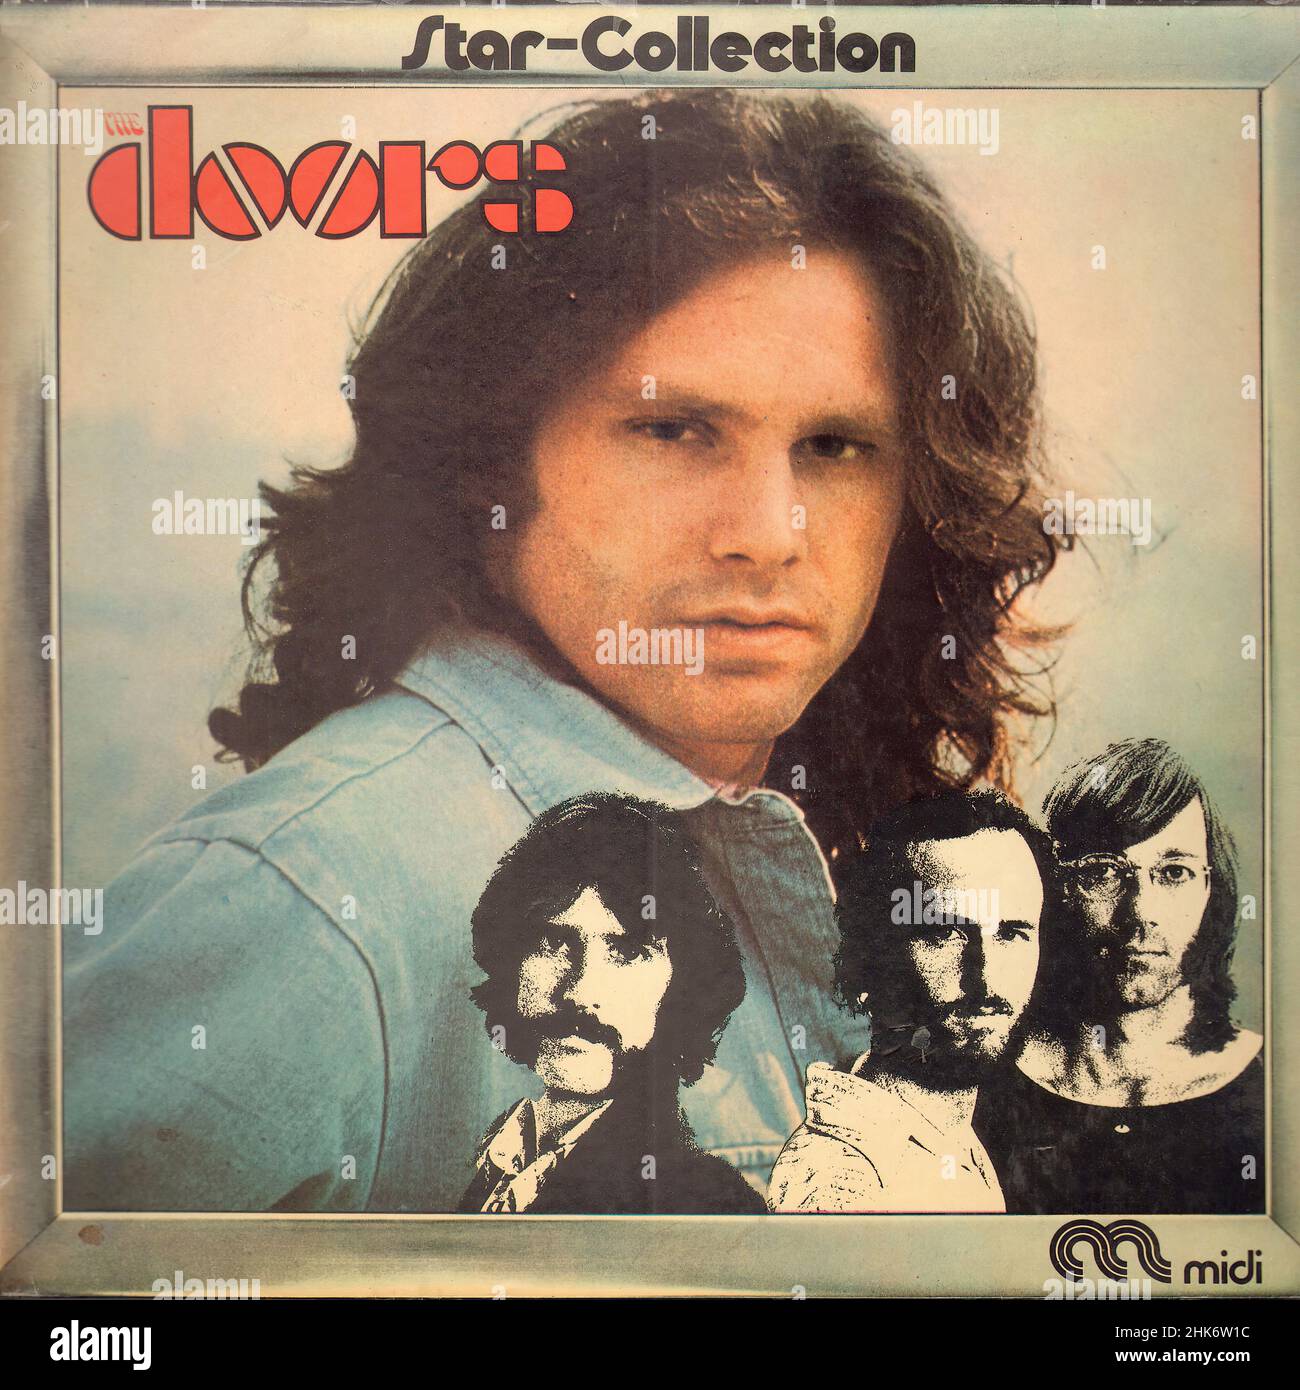 Copertina Vintage Vinyl record - Doors, The - Star Collection - D - 1973  Foto stock - Alamy